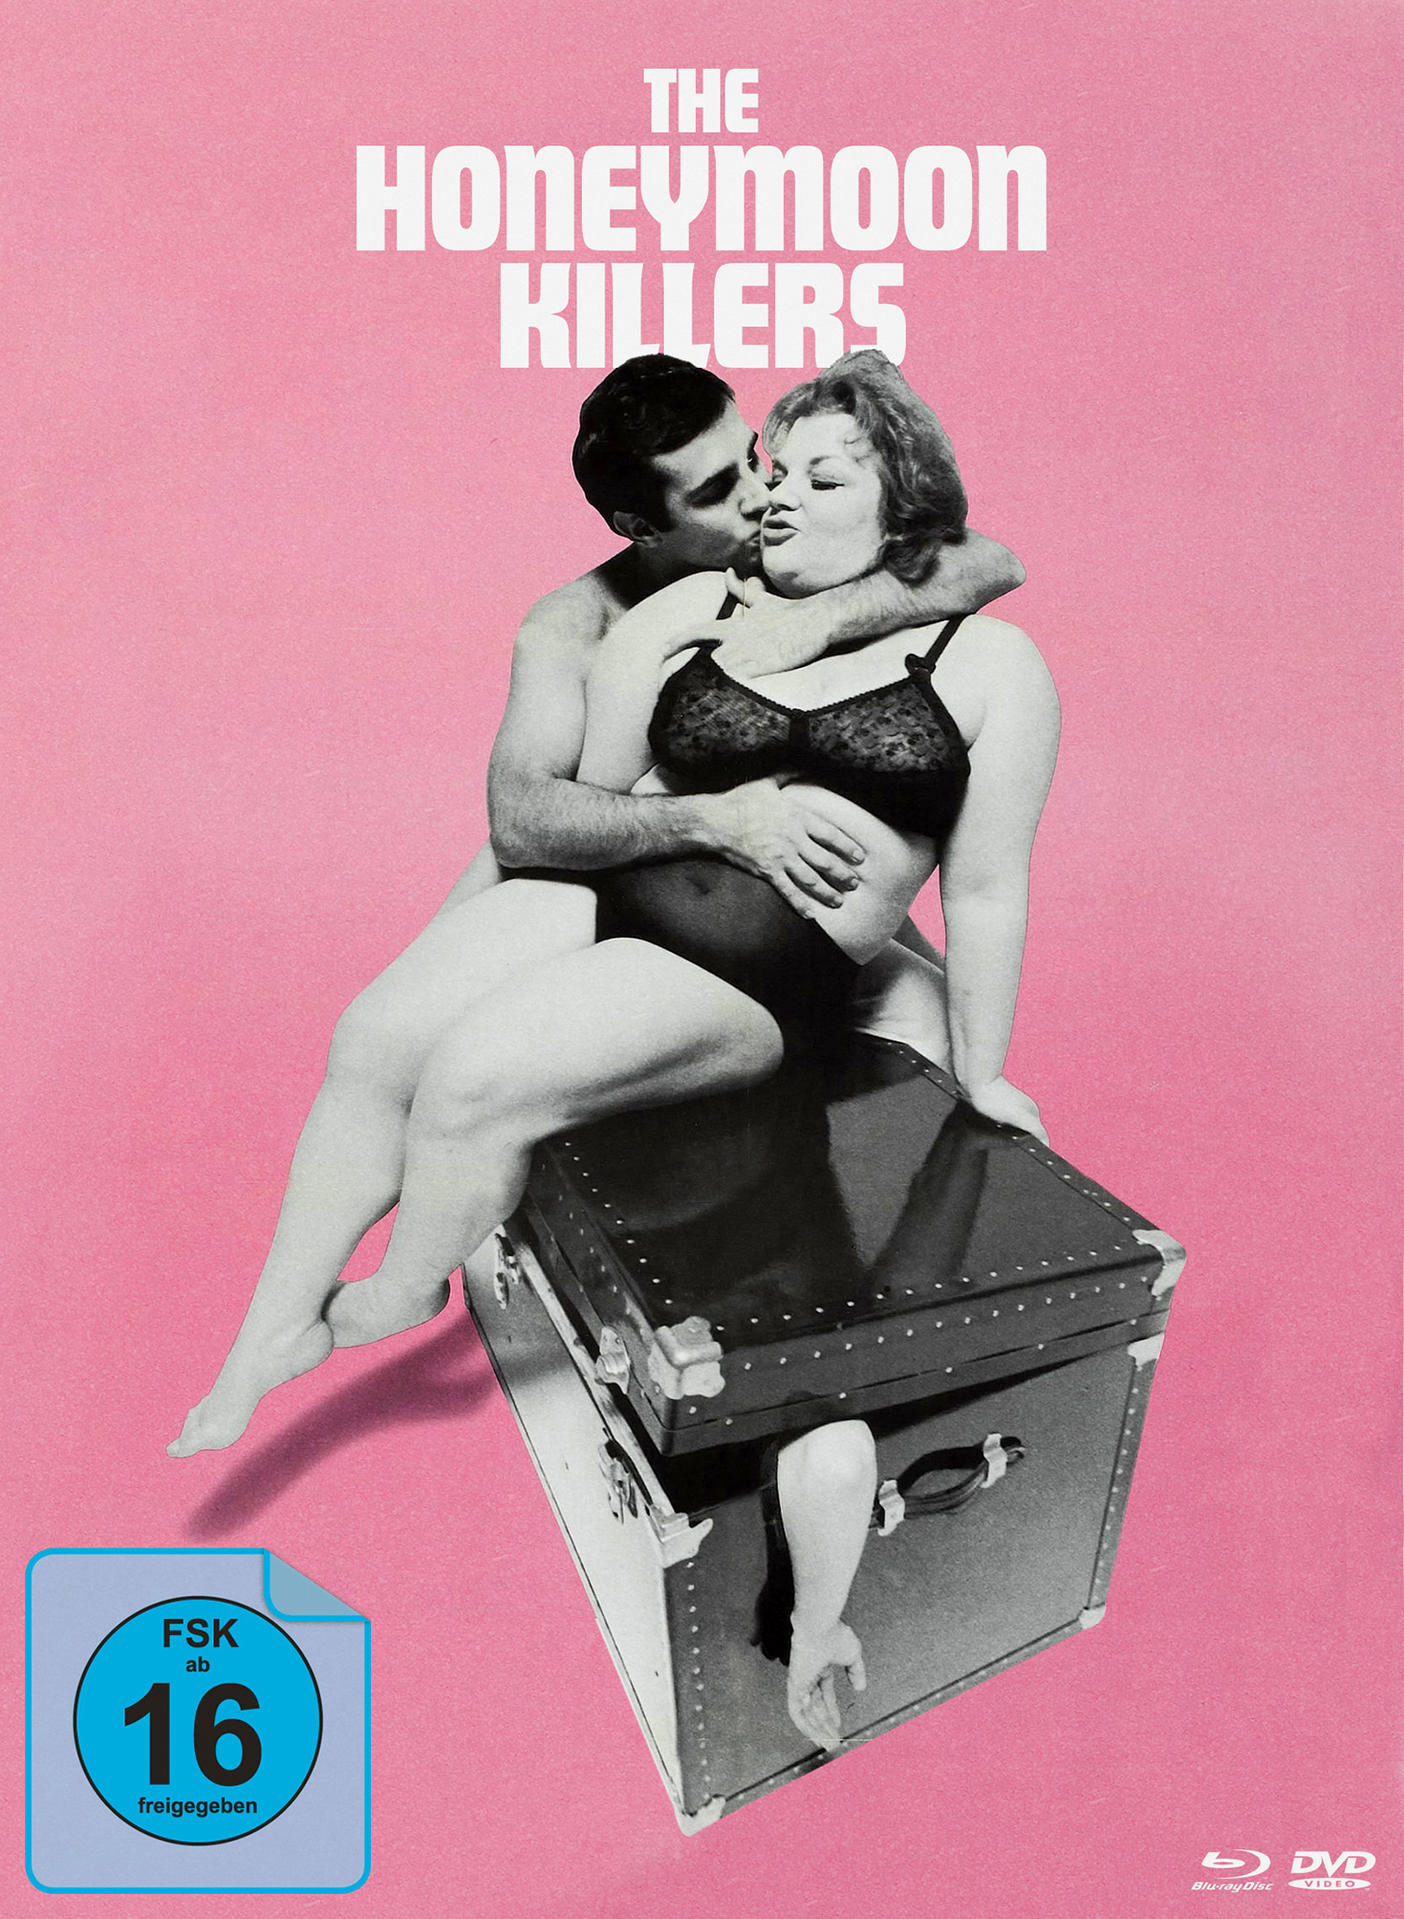 + The Blu-ray DVD Killers Honeymoon